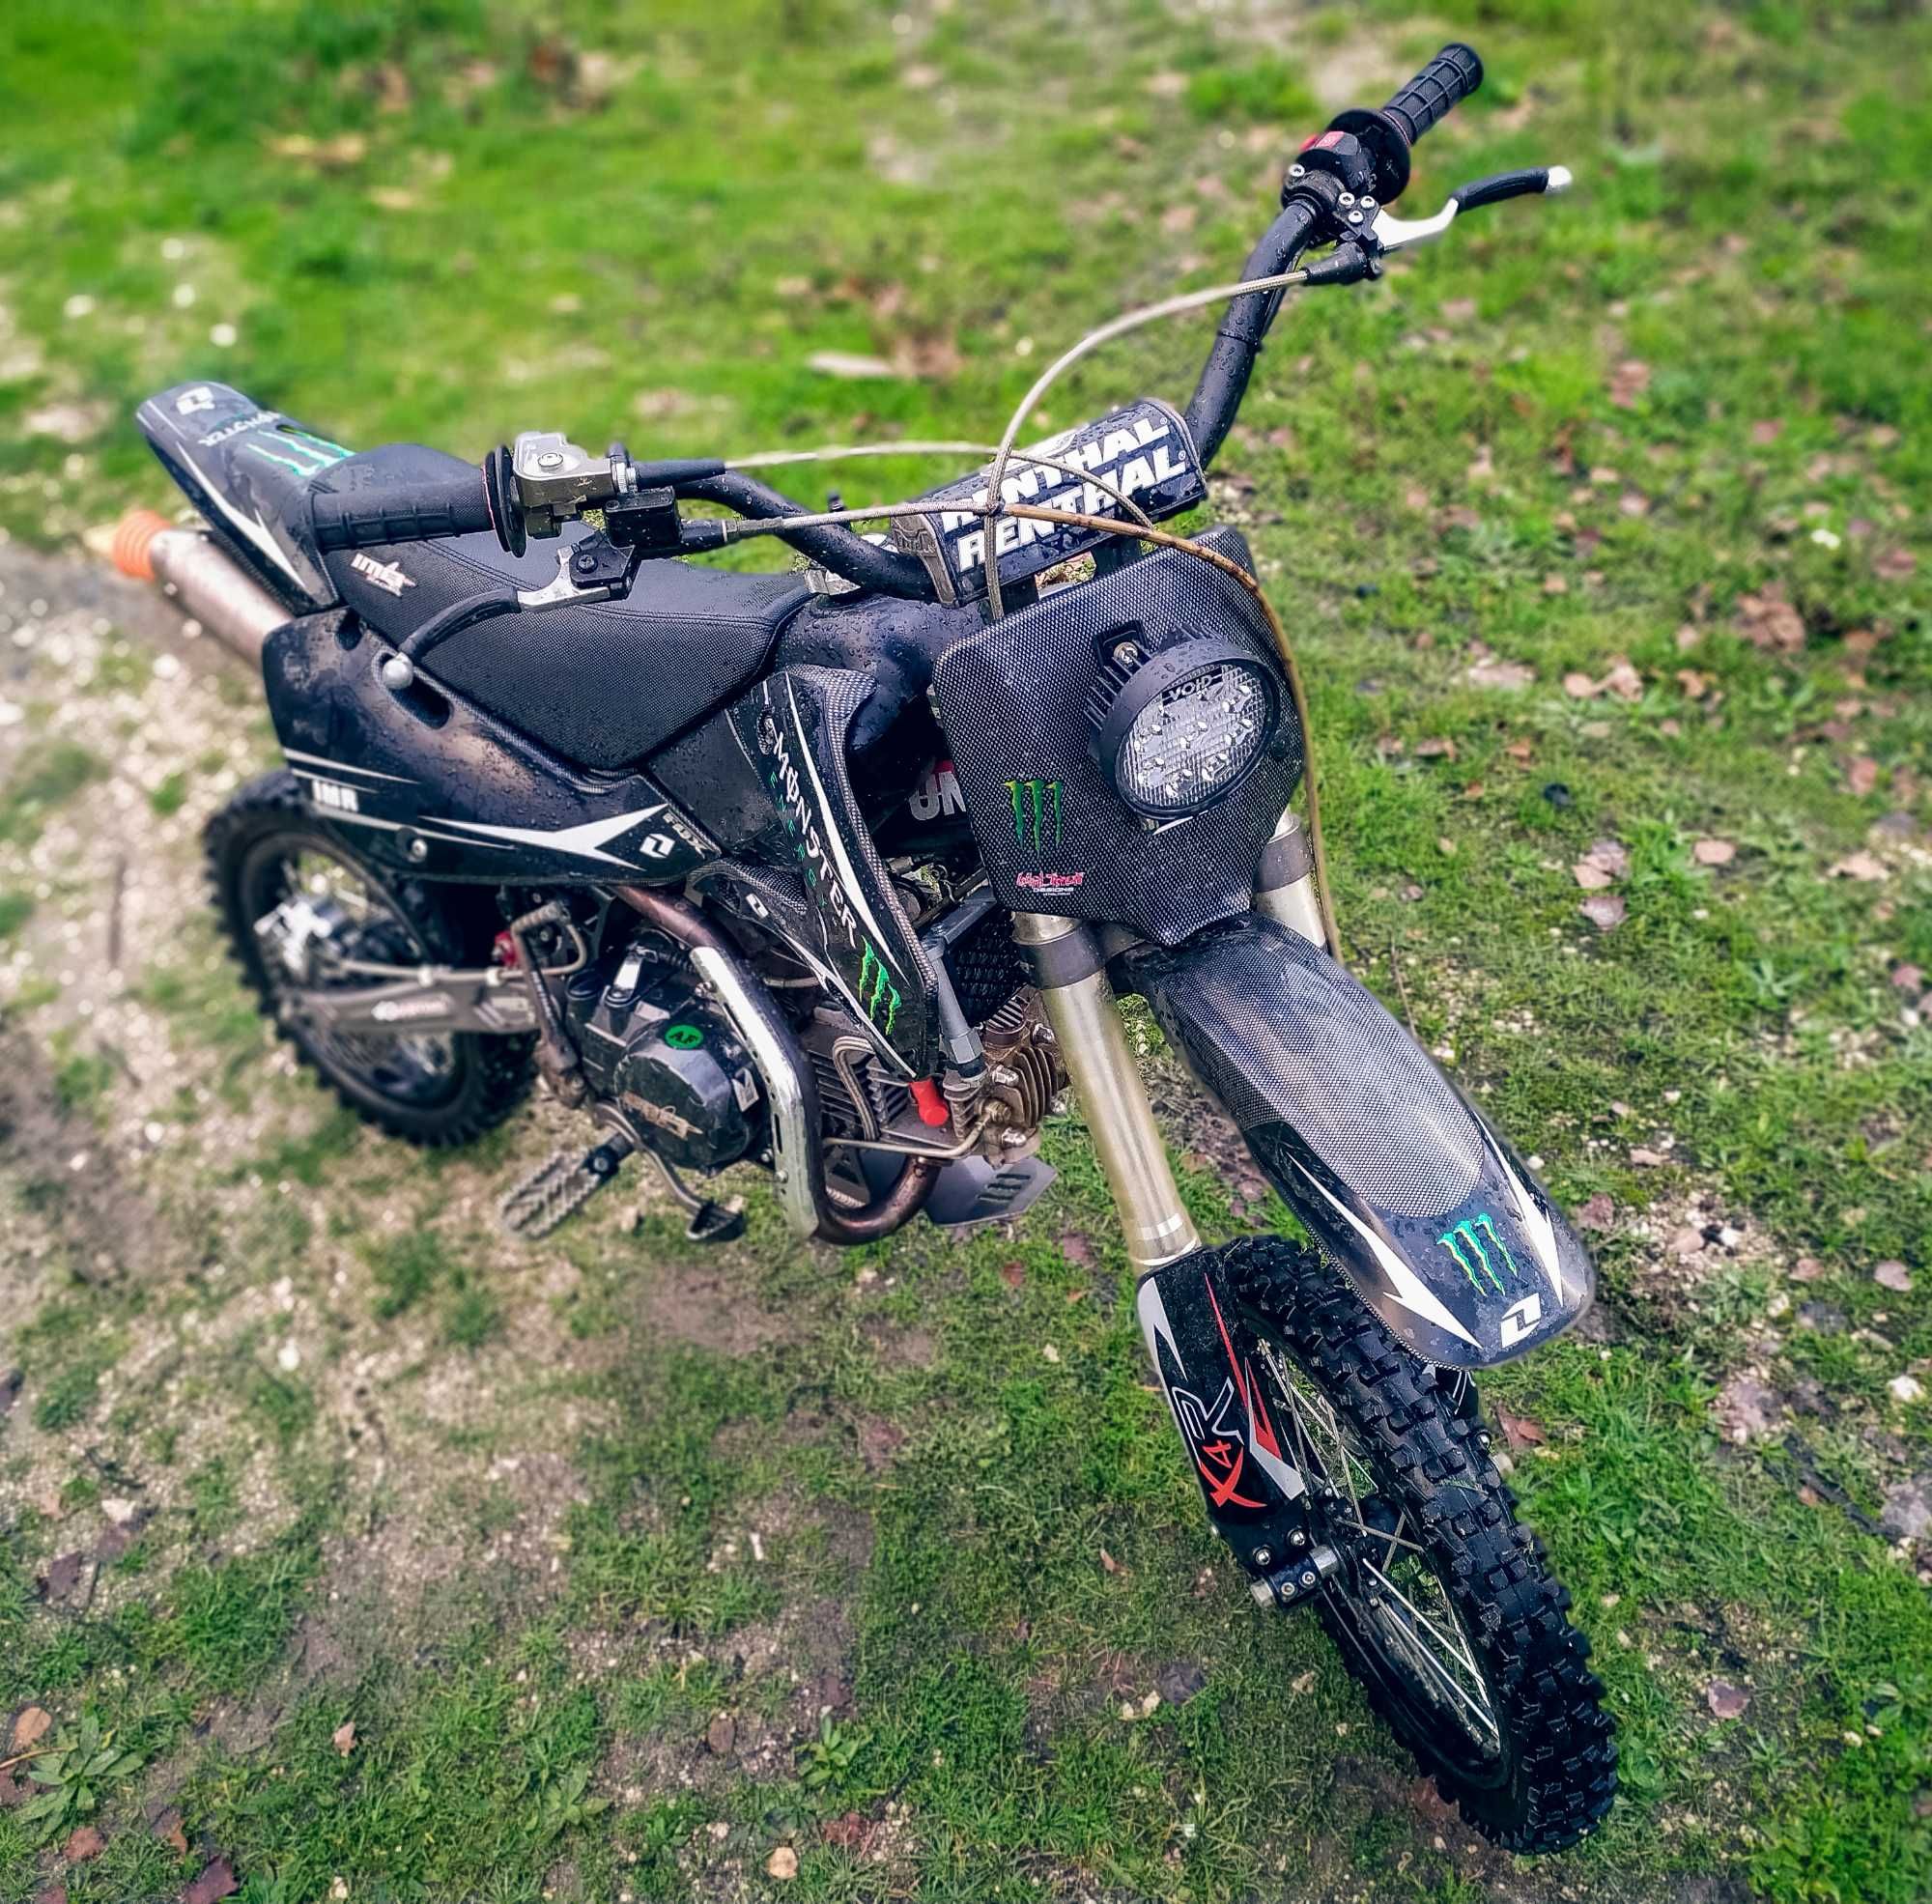 Pitbike IMR X4R 160cc KLX (provas nocturnas)